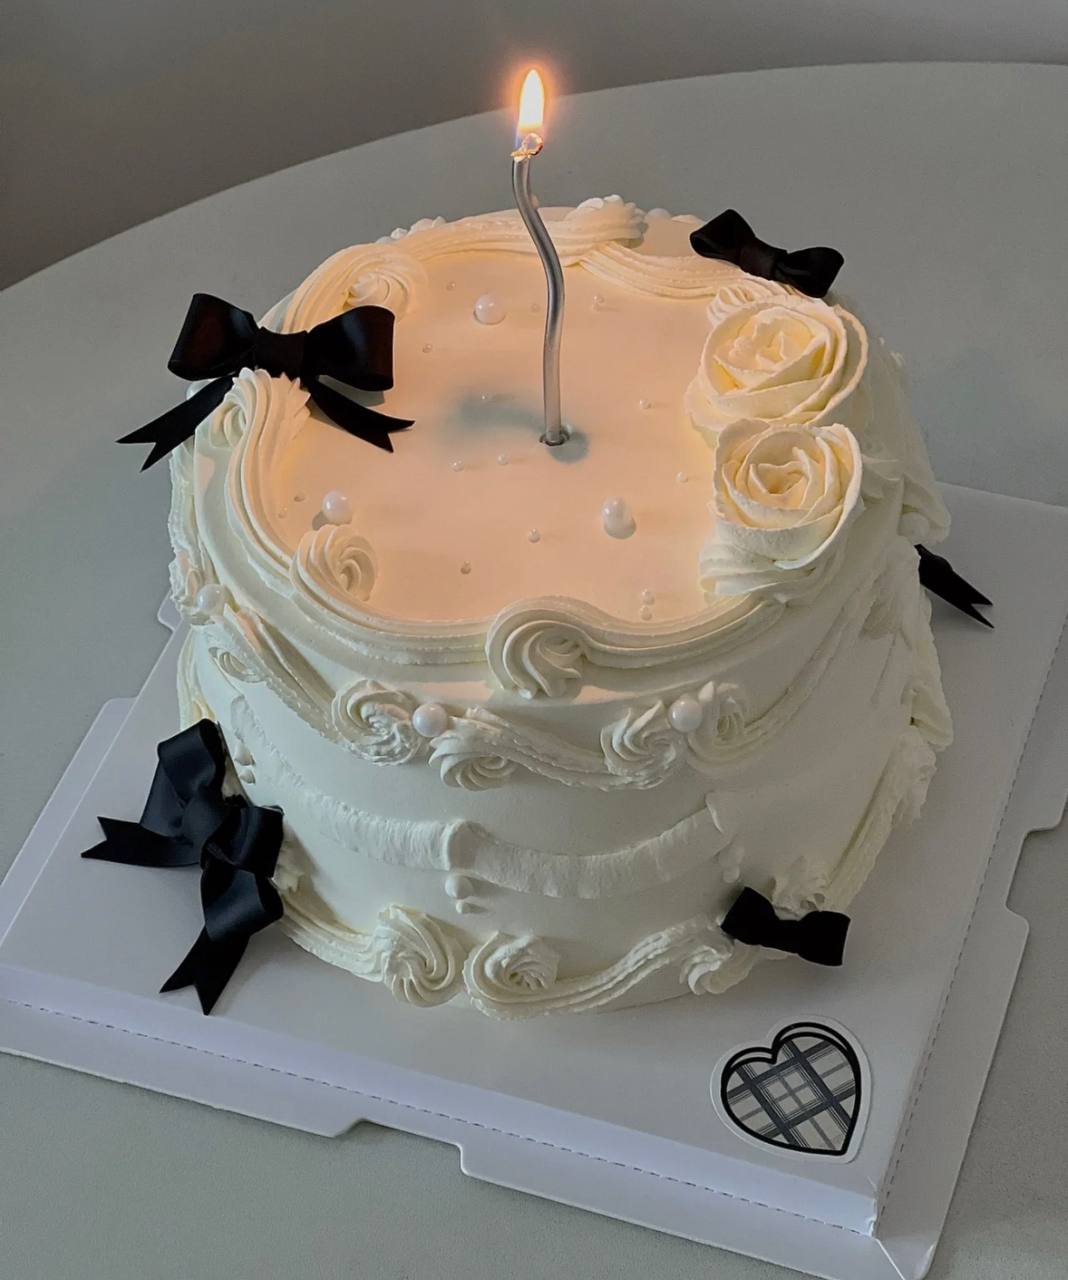 [Promo] White x Black Vintage Cake | Best Cake In Singapore